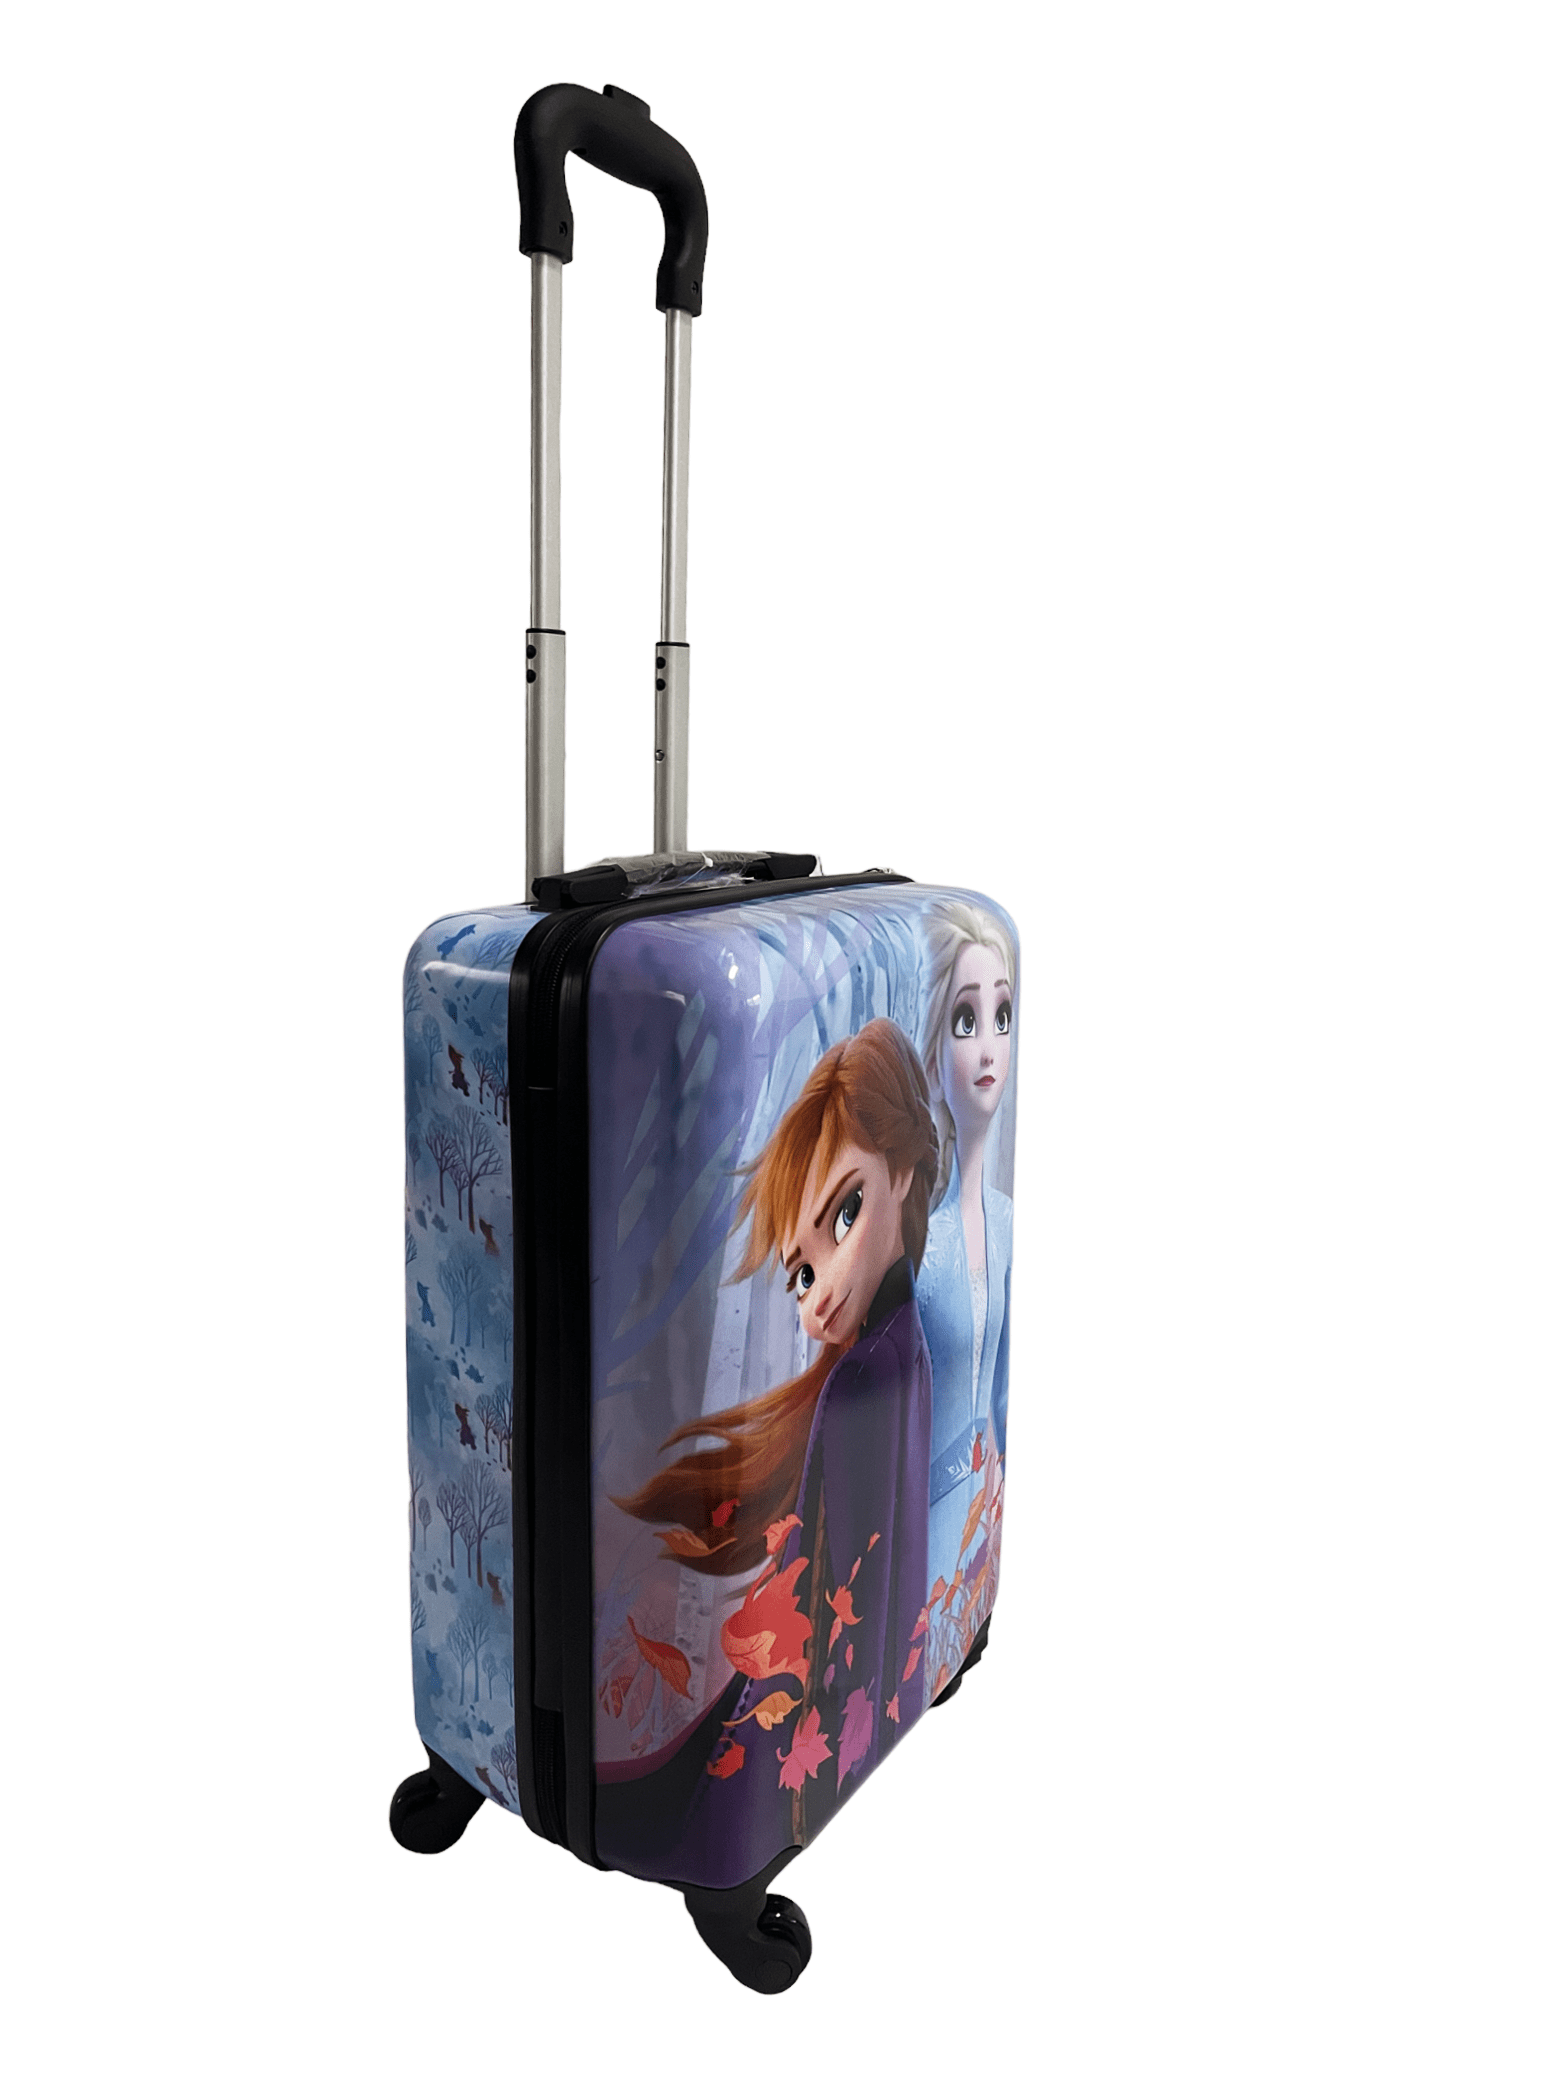 Disney Frozen Hard Side Spinner Trolley 18 Inch Luggage for Kids [Blue–